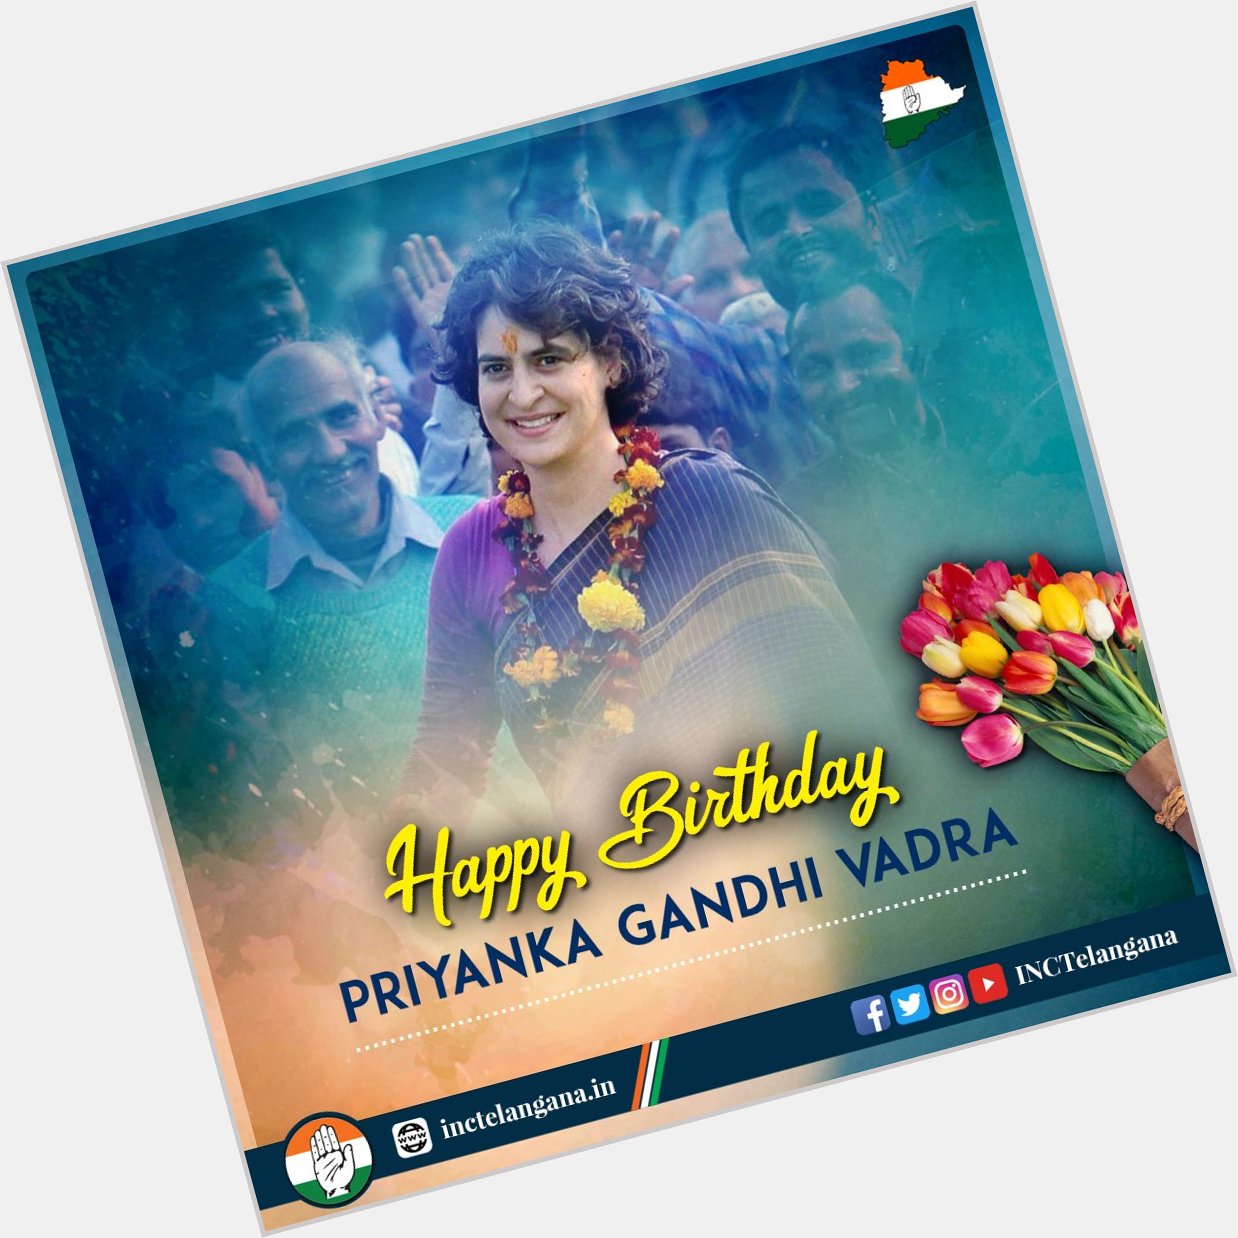 From everyone at INC we wish Priyanka Gandhi Vadra a very Happy Birthday! 